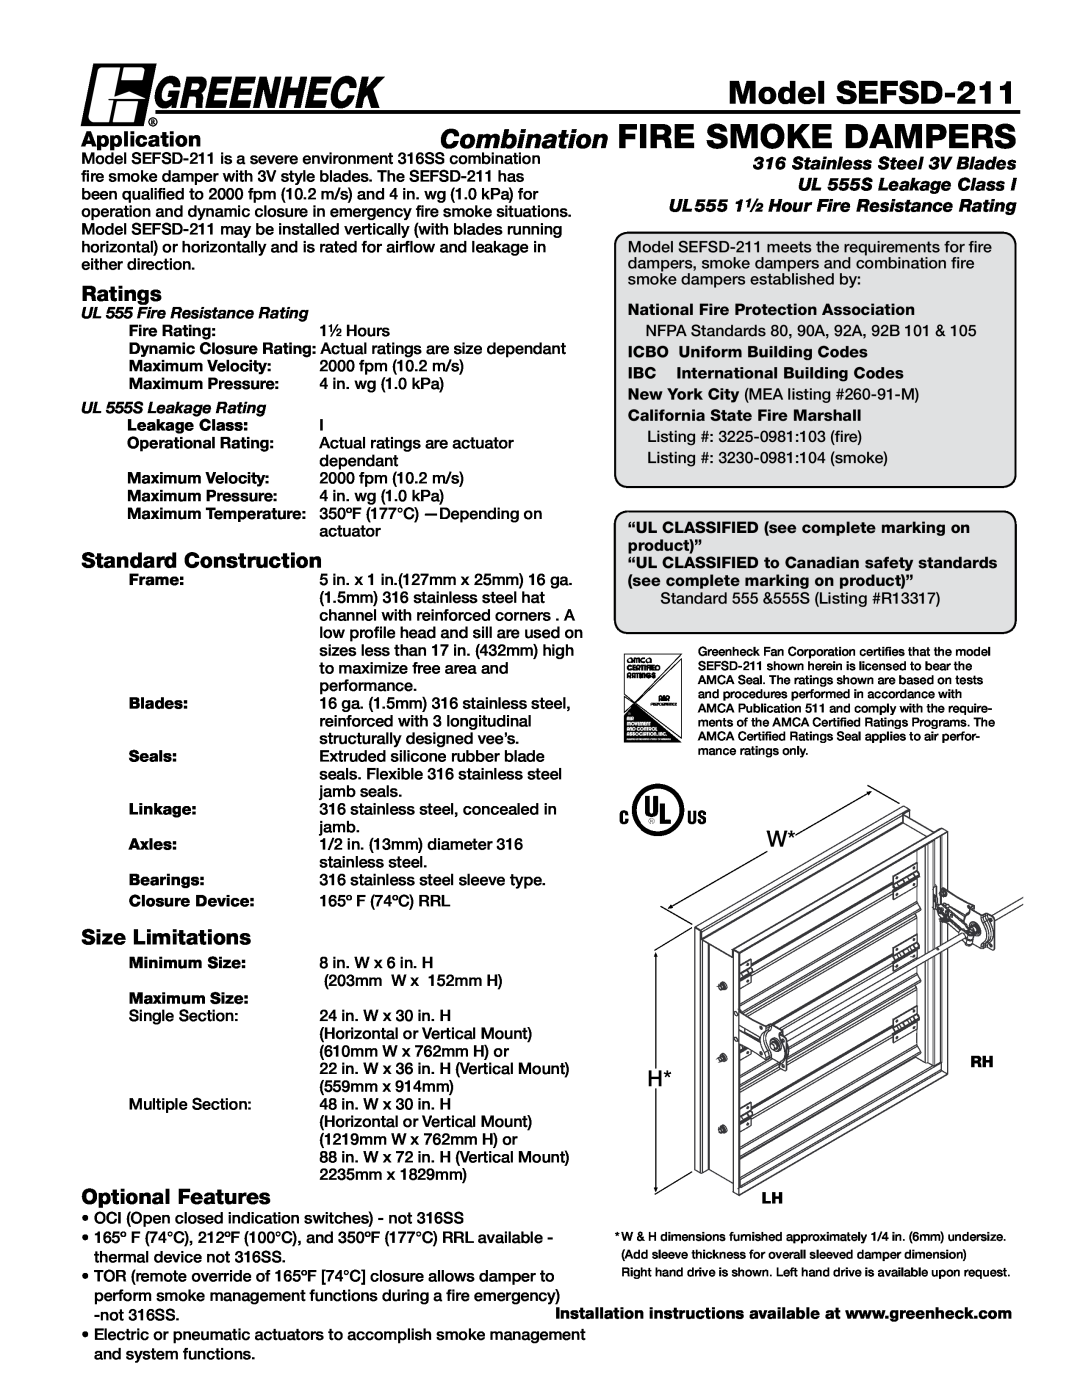 Greenheck Fan dimensions Model SEFSD-211, Application, Ratings, Standard Construction, Size Limitations 